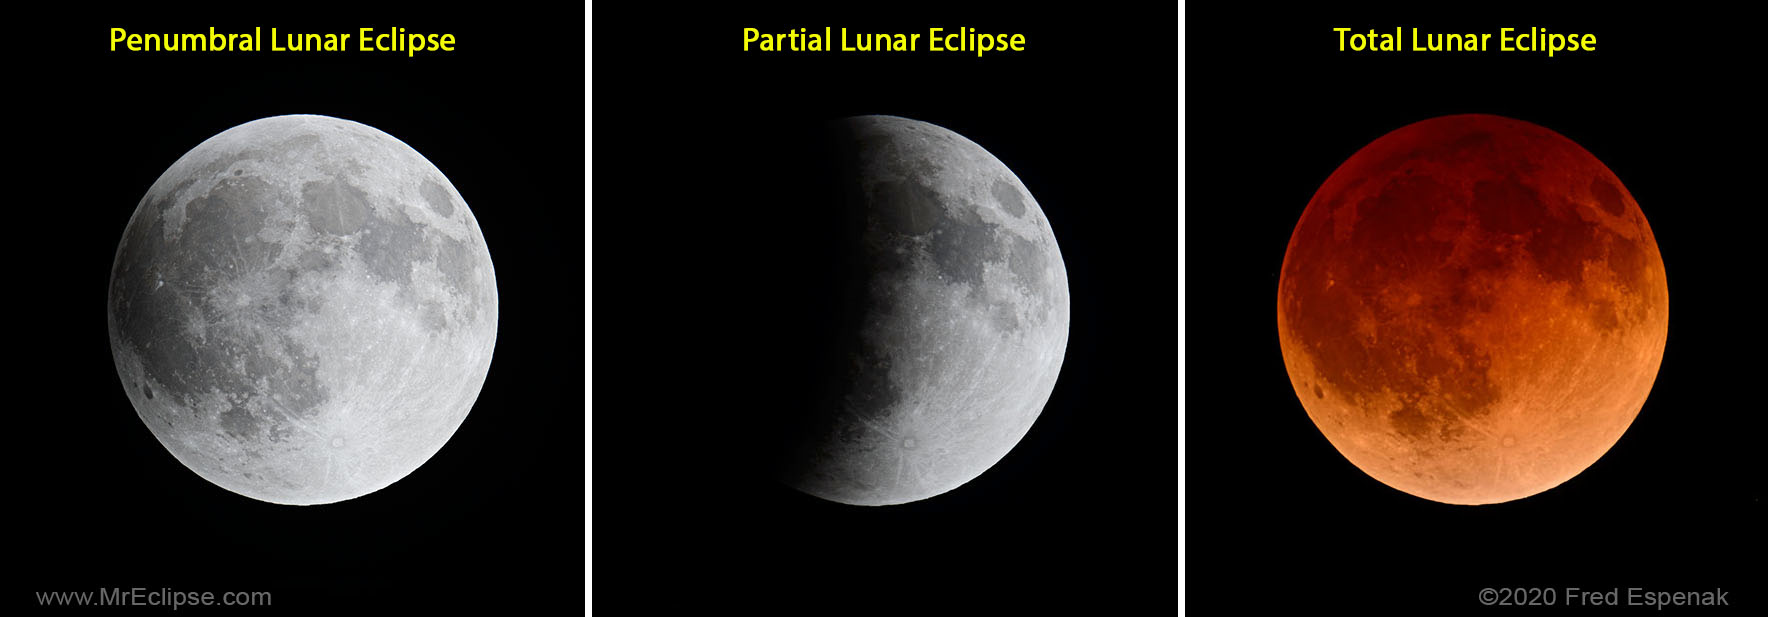 eclipsewise-lunar-eclipse-basics